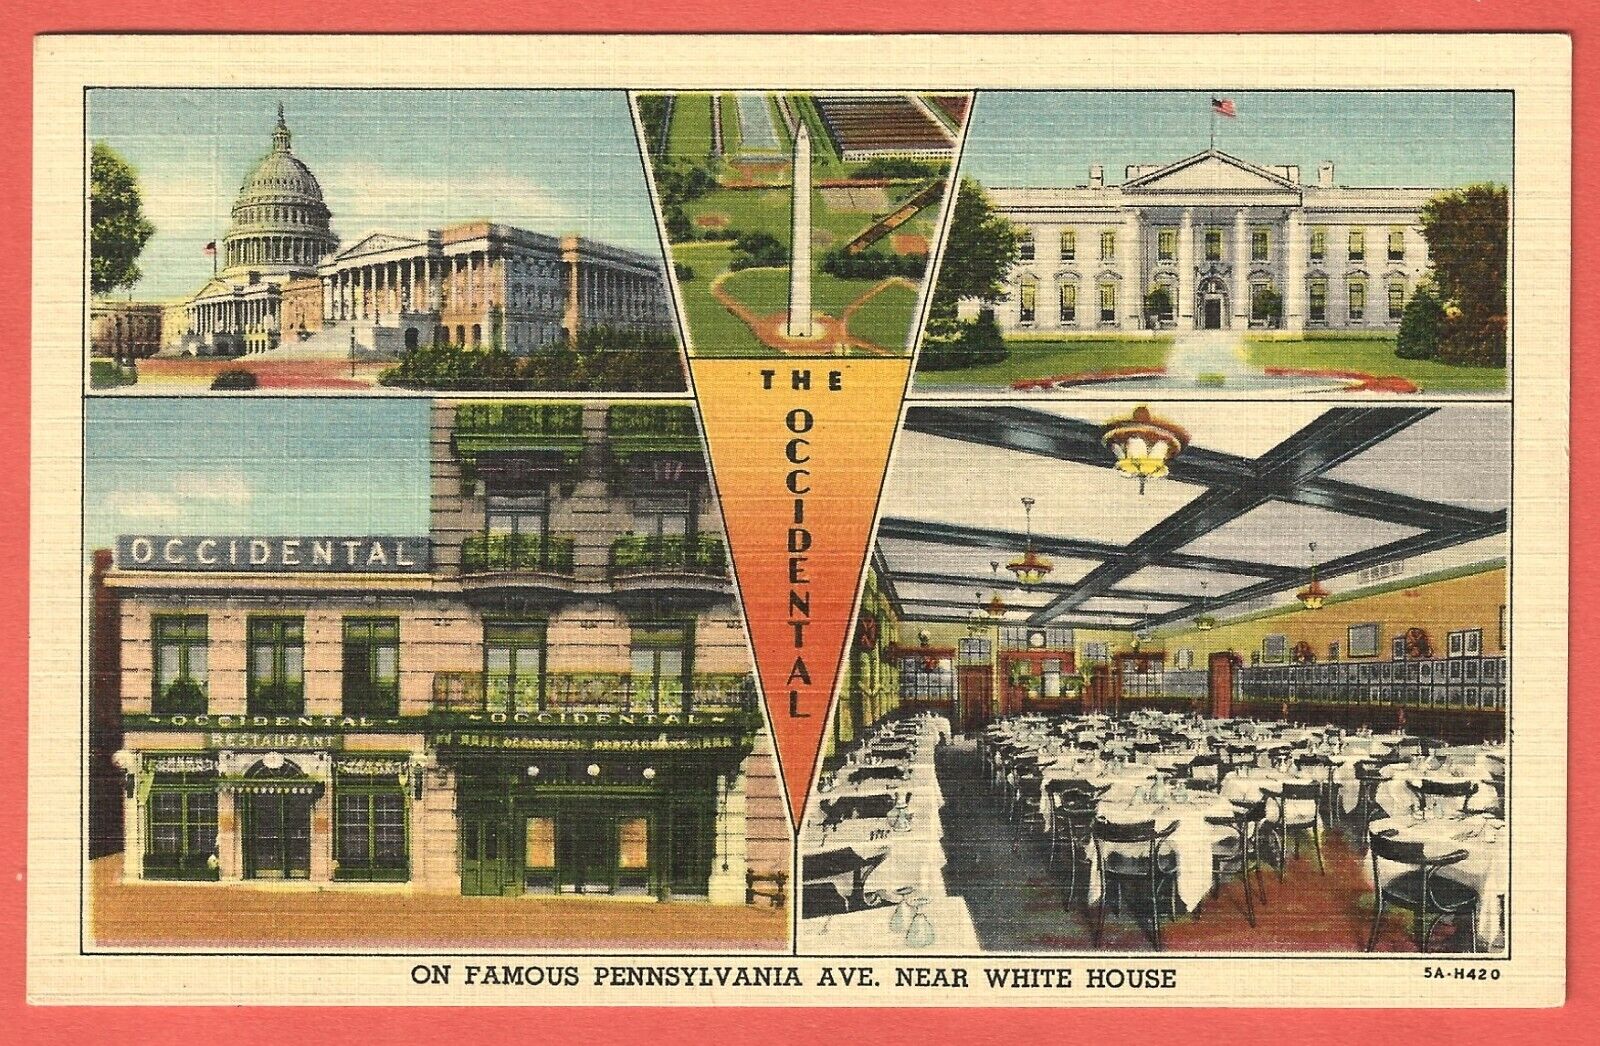 THE OCCIDENTAL, PENNSYLVANIA AVE., WASHINGTON, D.C. - 1935 Linen Postcard